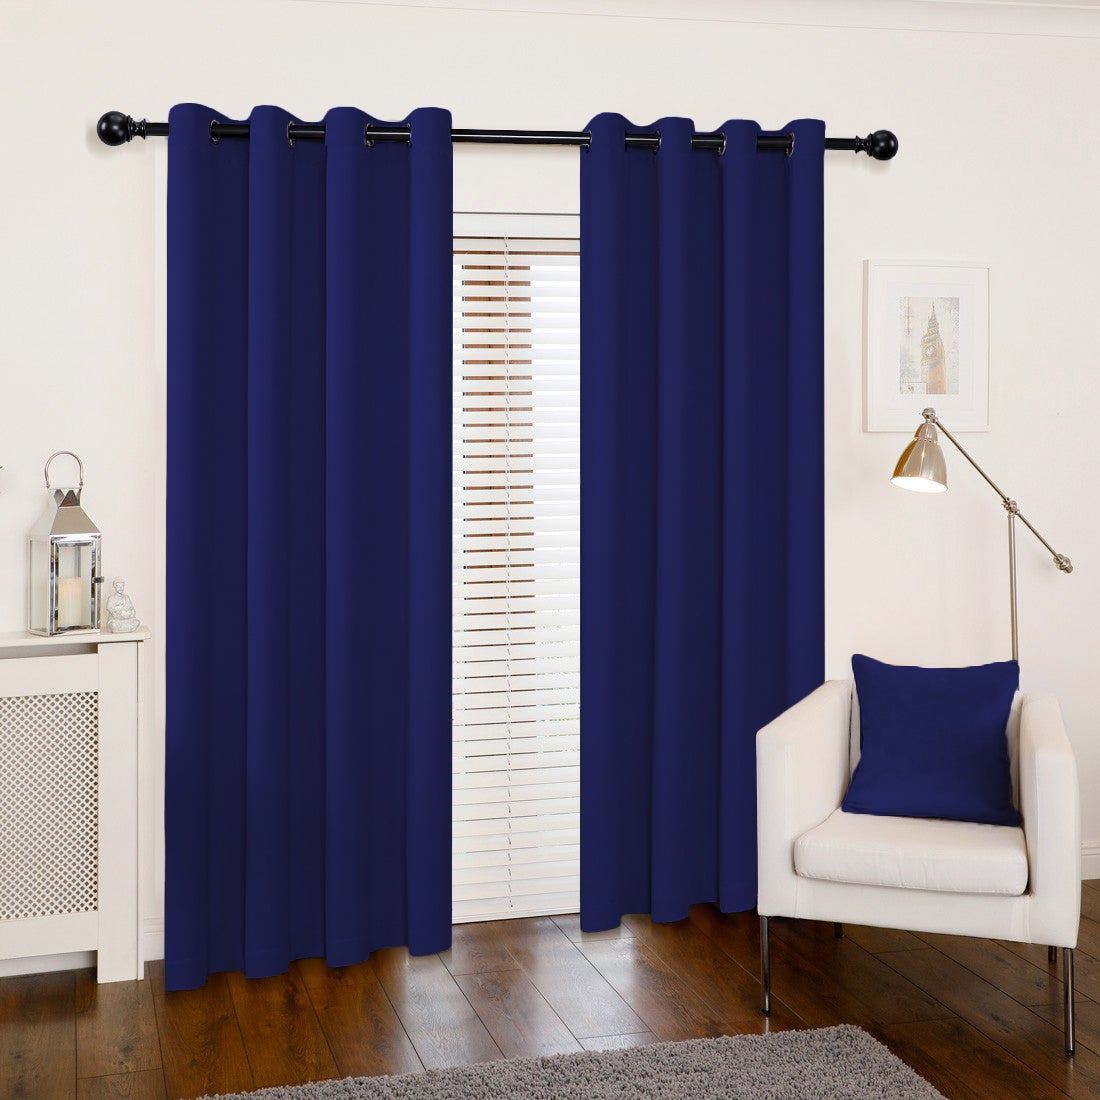 Akarise Blackout Curtains for Bedroom Living Room - 2 Panels,Navy Blue